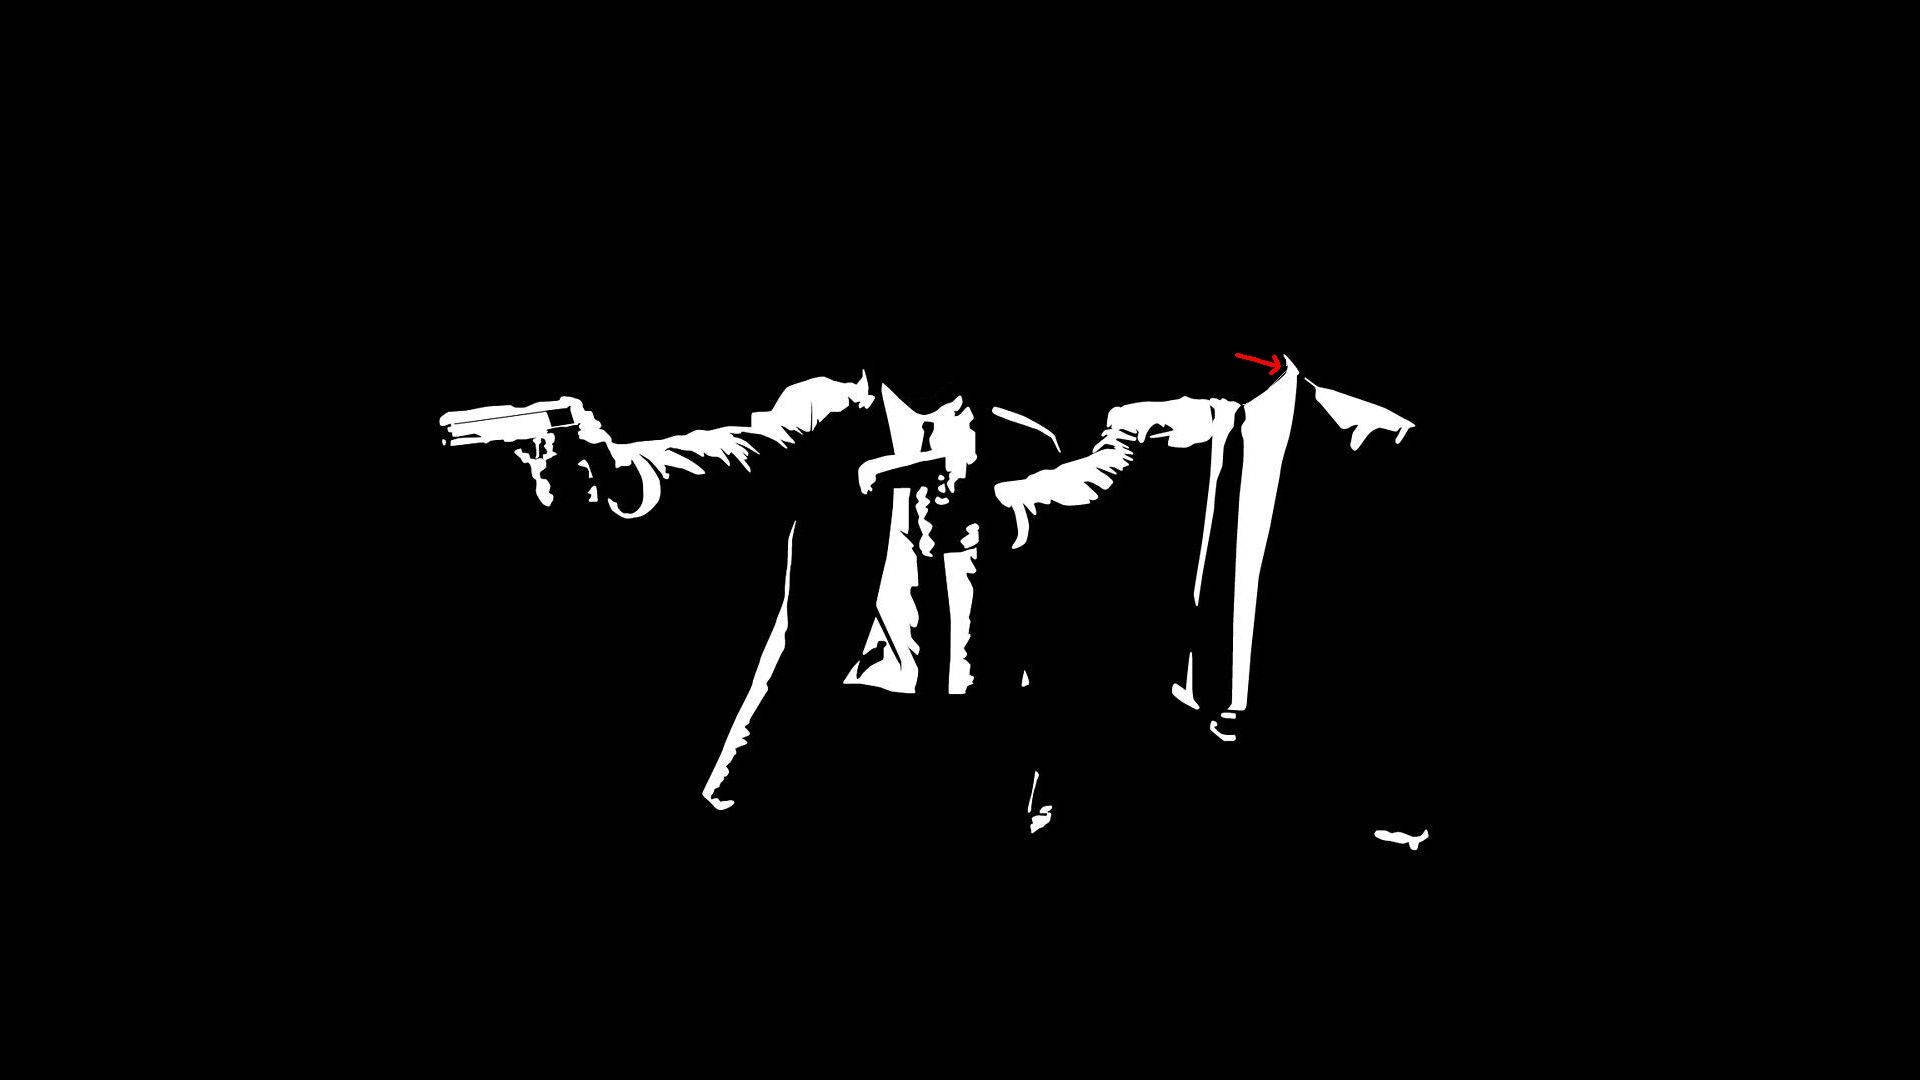 Black And White Suit Pulp Fiction Digital Art Background